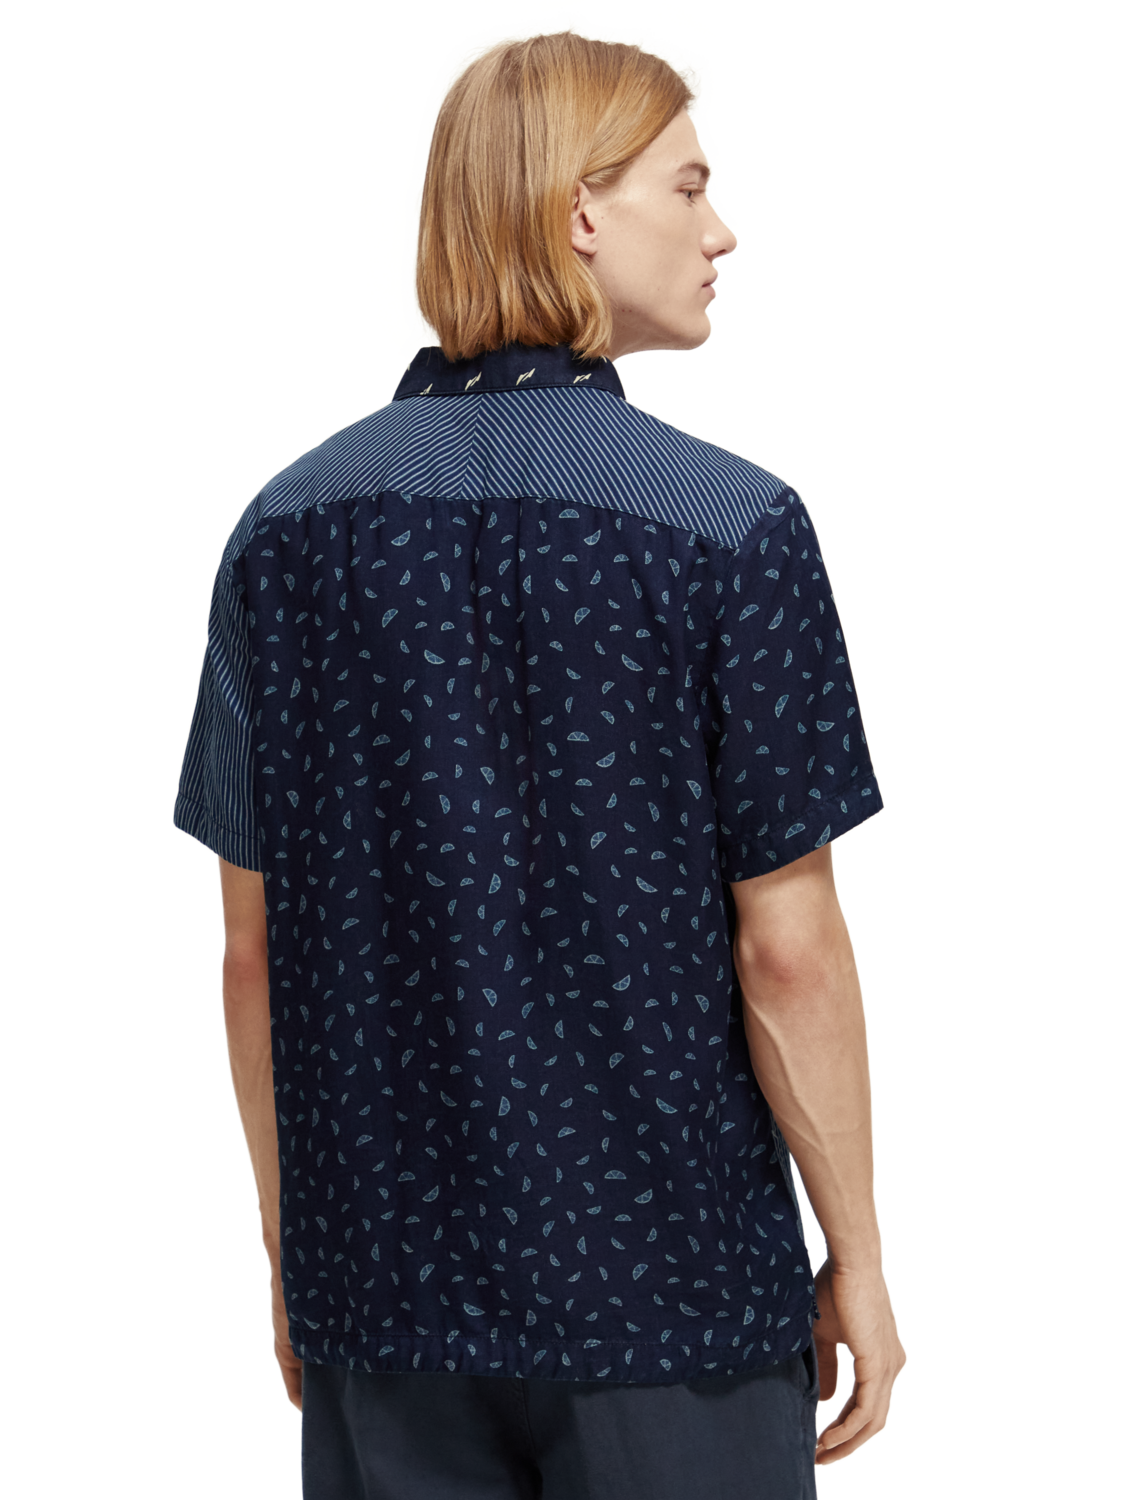 Short Sleeve Indigo Patchwork Beach Shirt